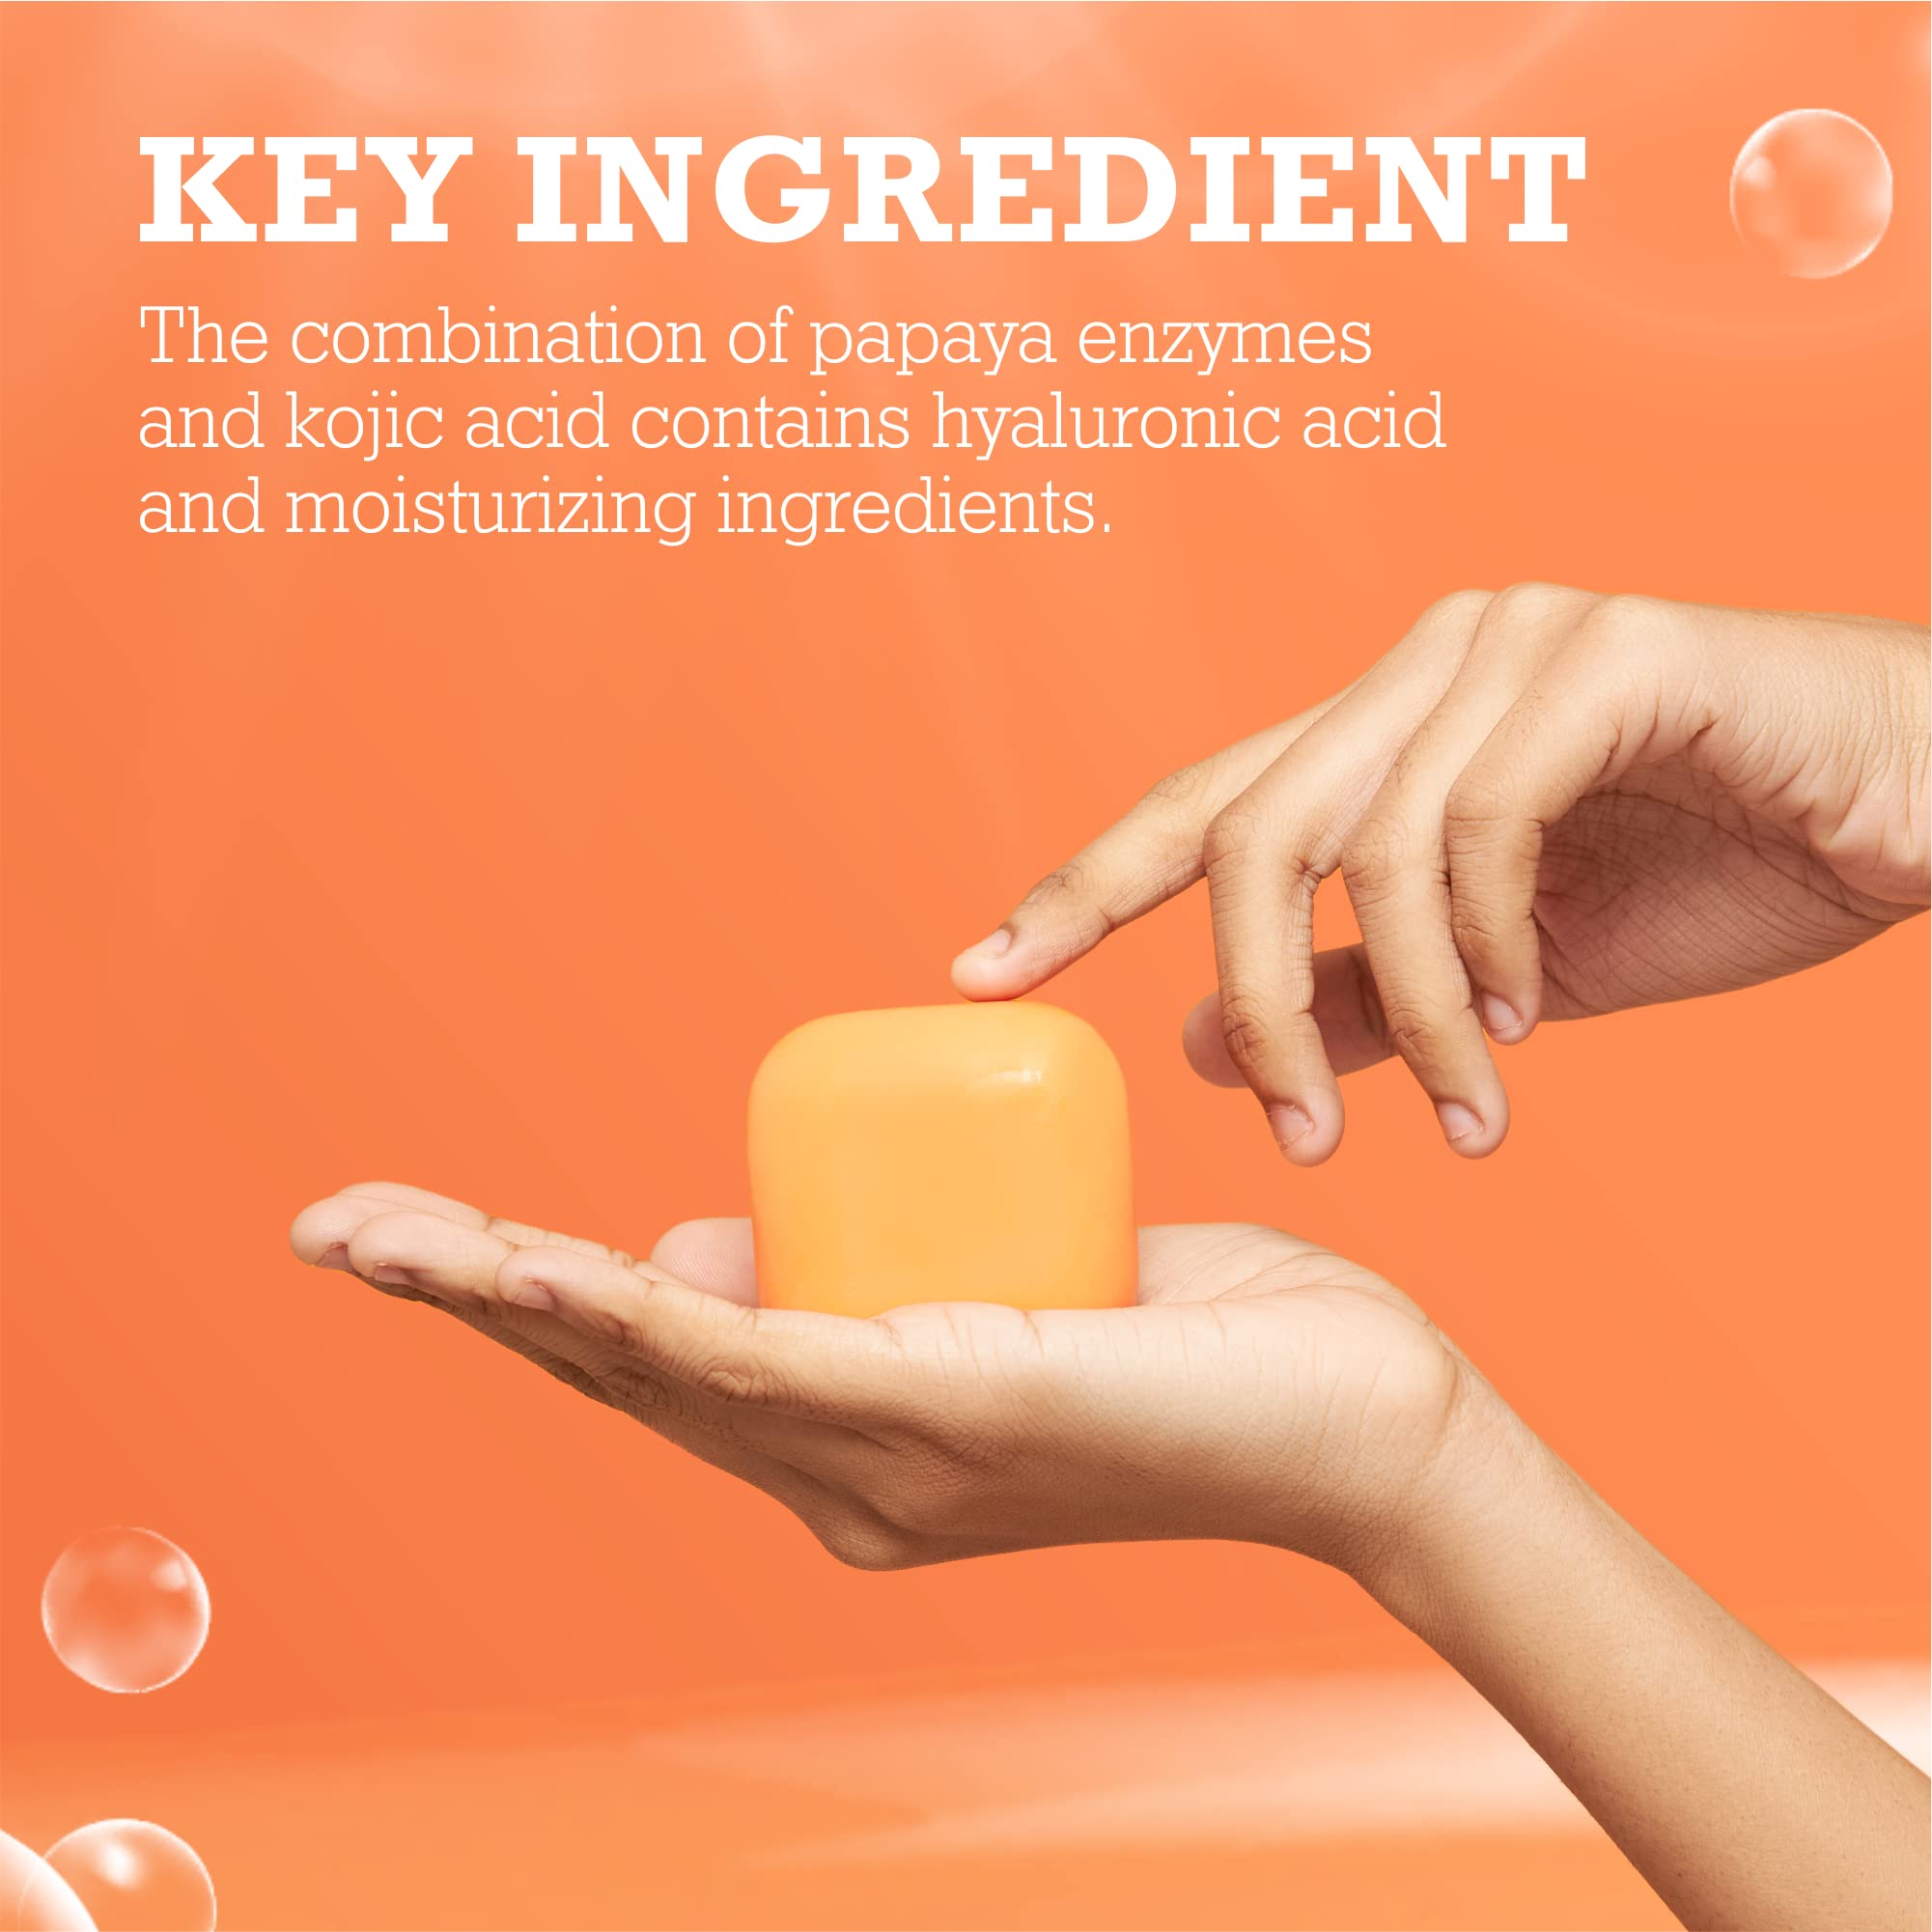 Koji White Kojic Acid & Papaya Soap with Hyaluronic Acid, SLS & Paraben-Free, Vegan Soap, Not tested on Animals, 2.82 oz (2 Bars)